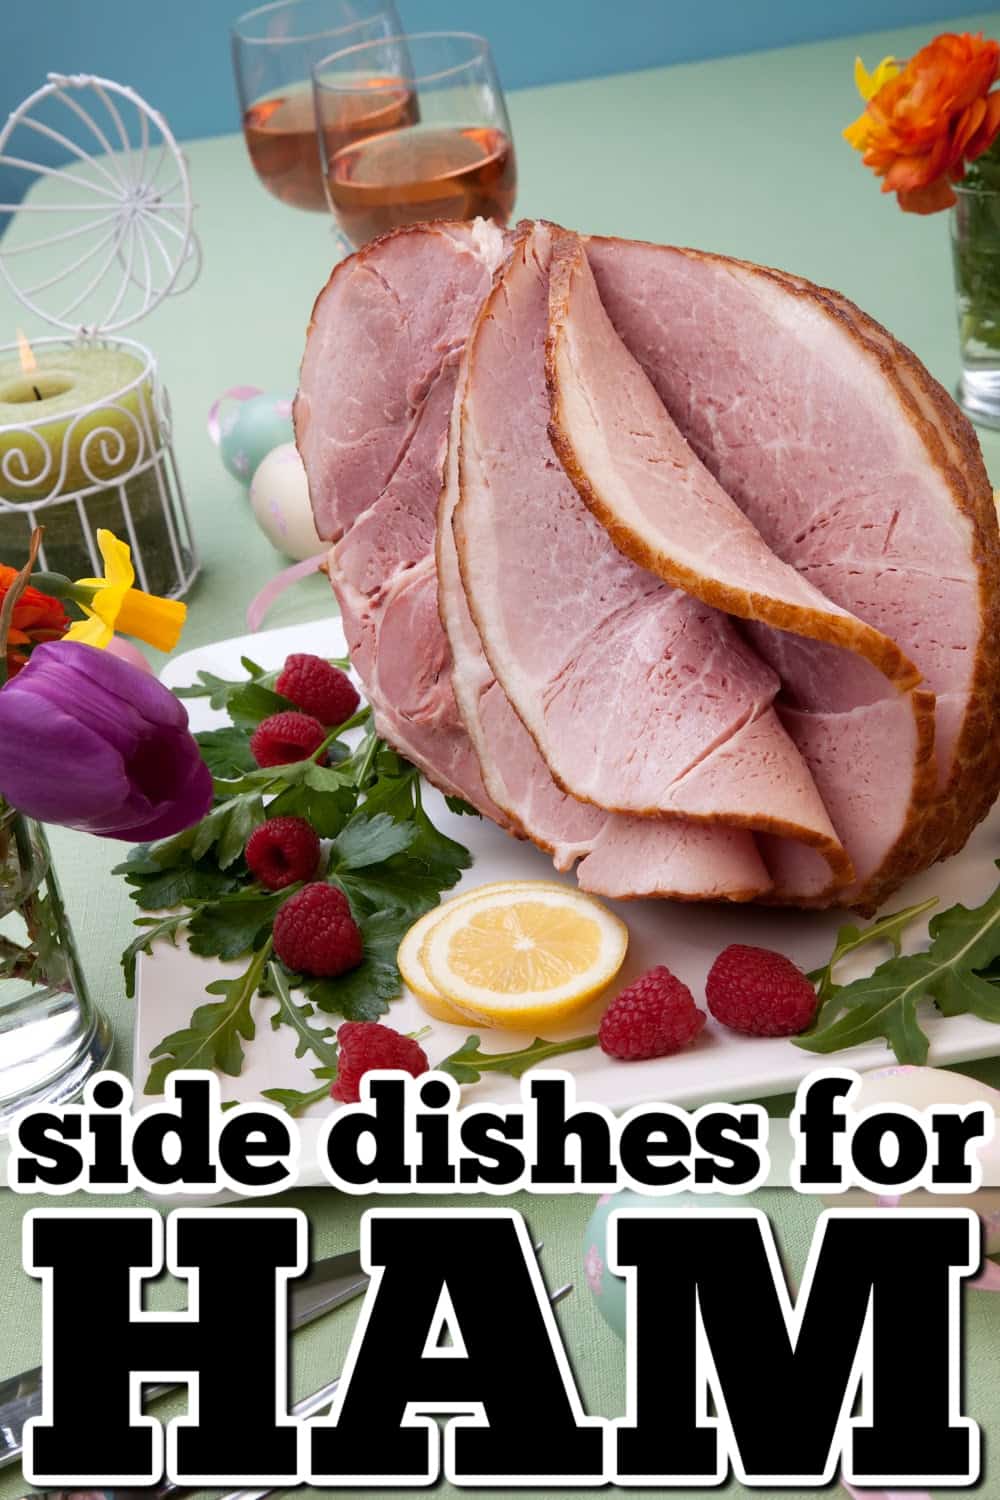 Side dishes for ham.pinterest image